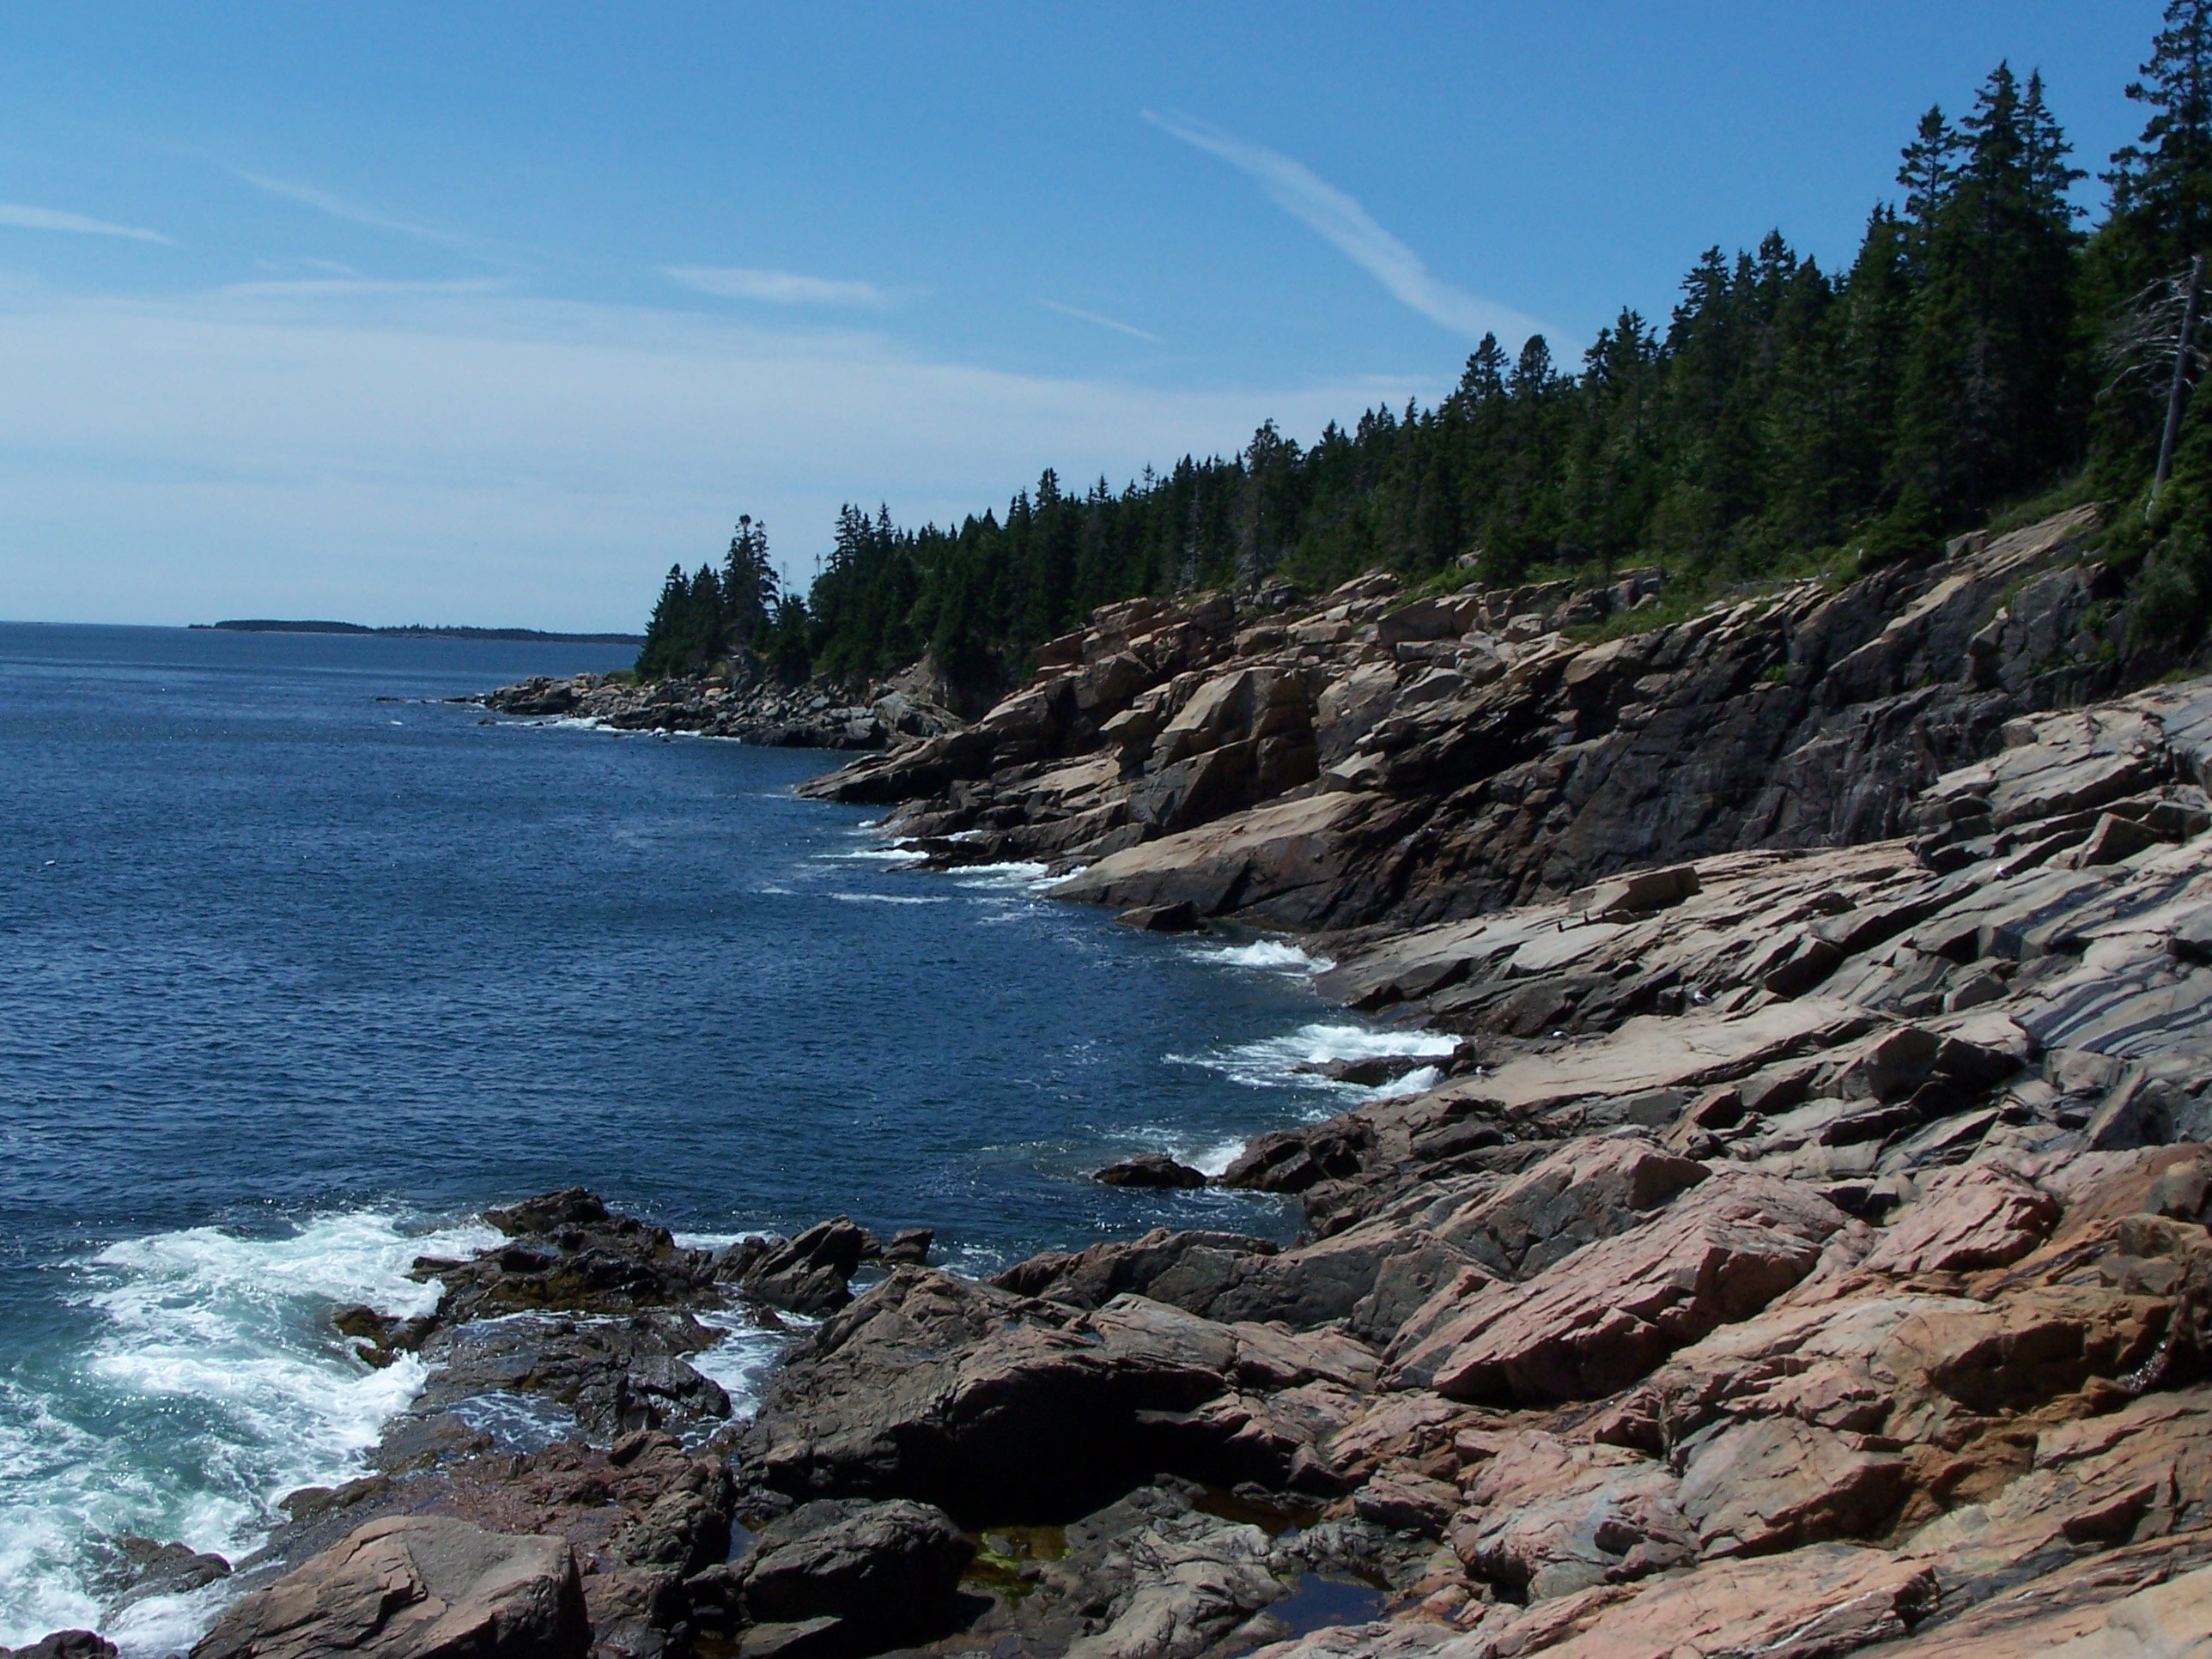 Photogra of the Coast in Acadia National Park